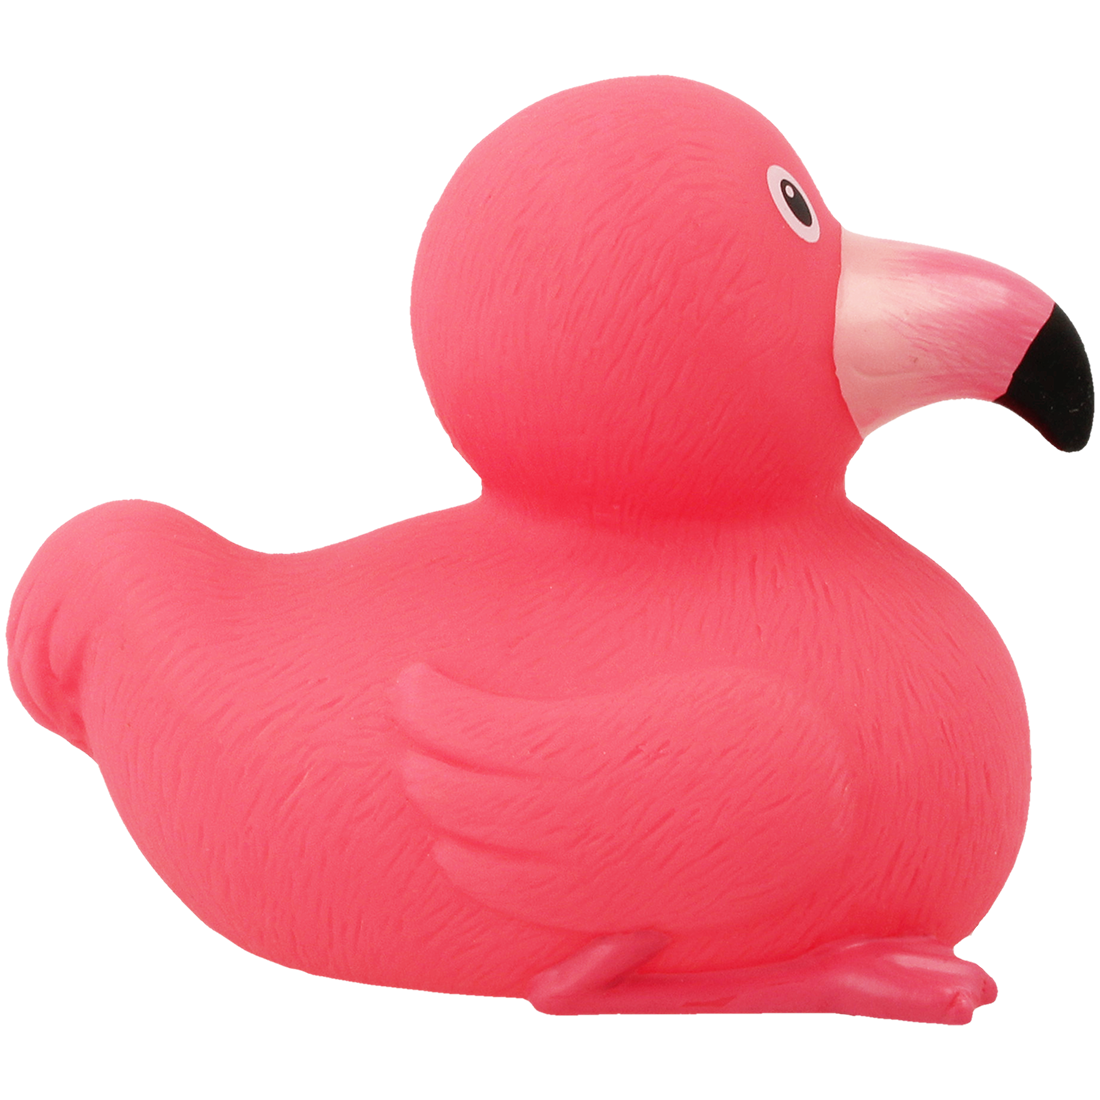 LILALU - SHARE HAPPINESS - Flamingo Quietscheente - design by